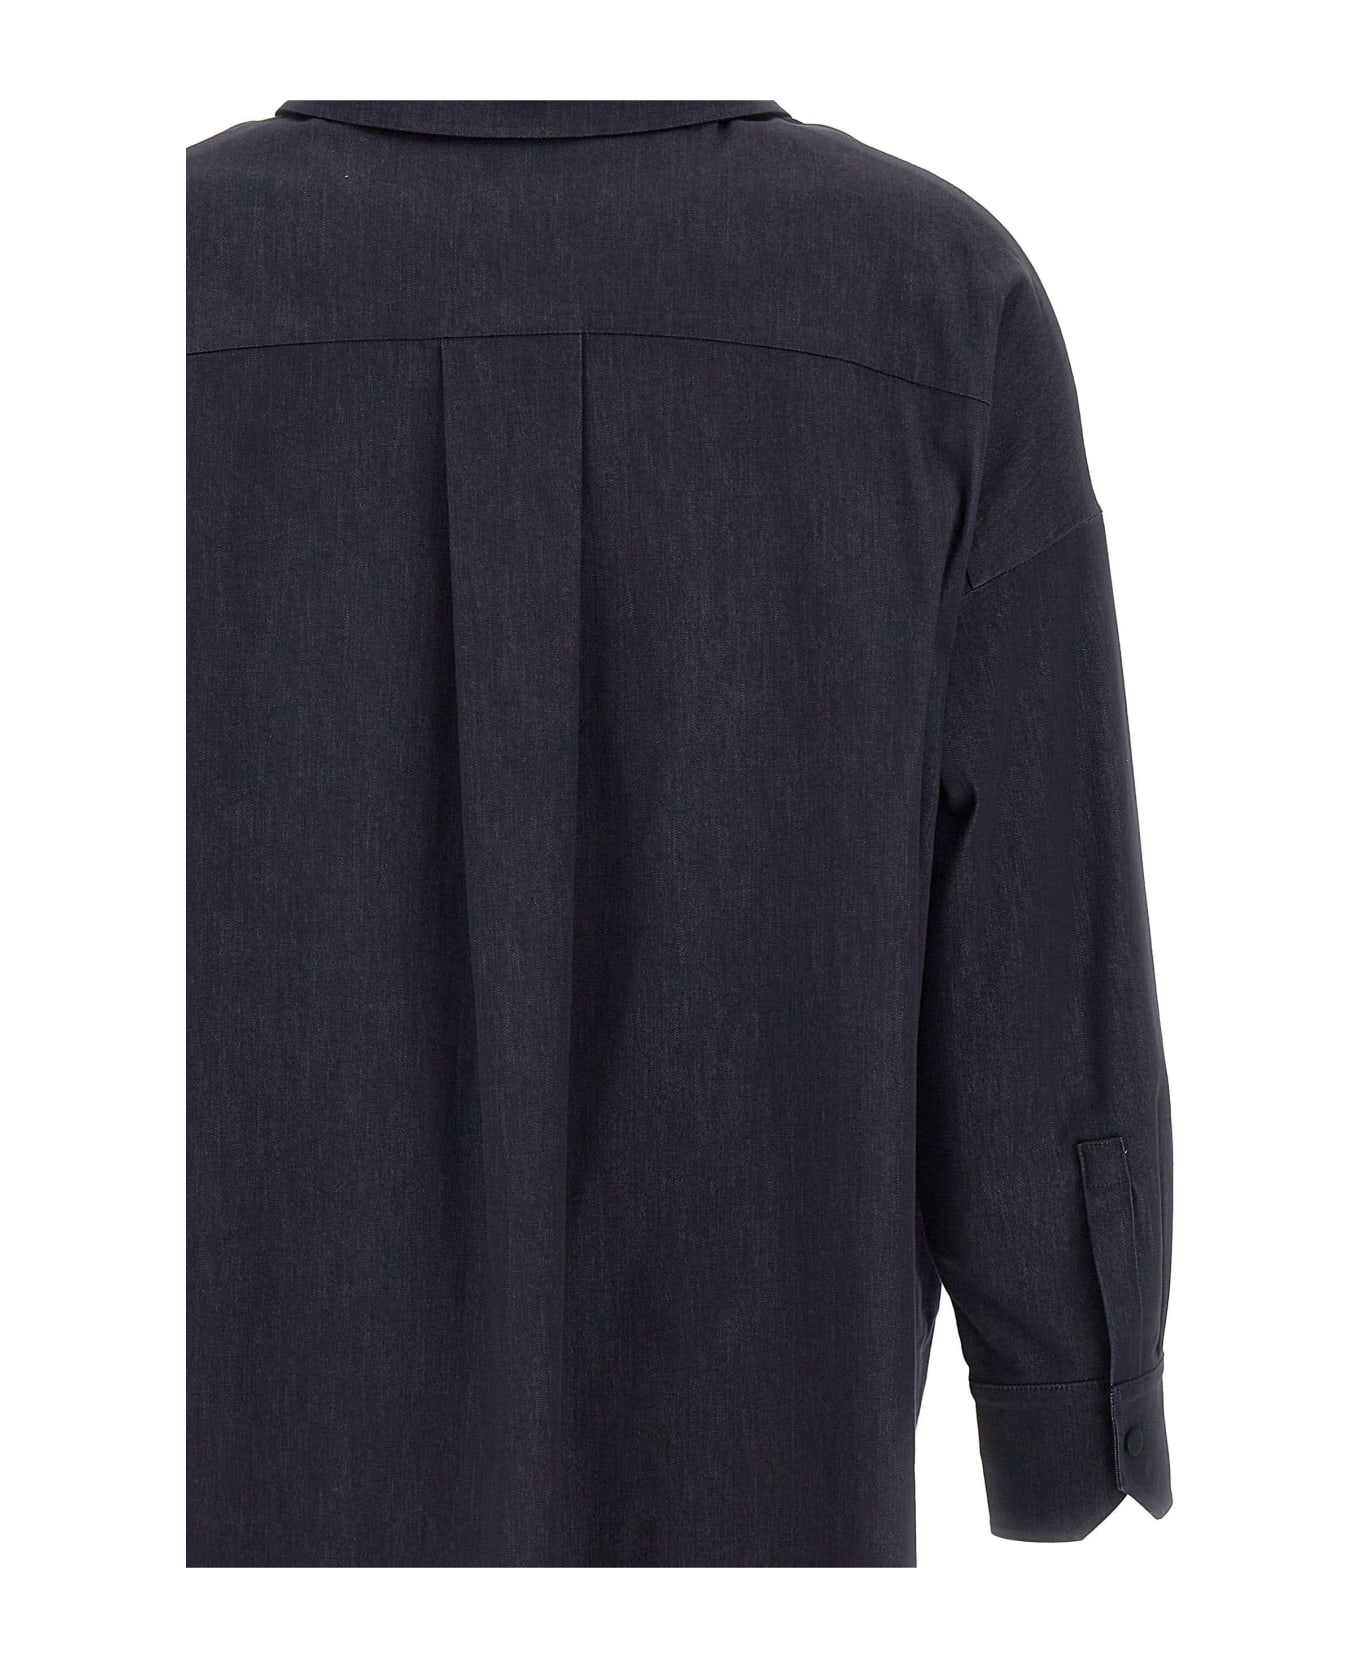 RRD - Roberto Ricci Design 'marina Overshirt ' Jacket - Blue Black シャツ